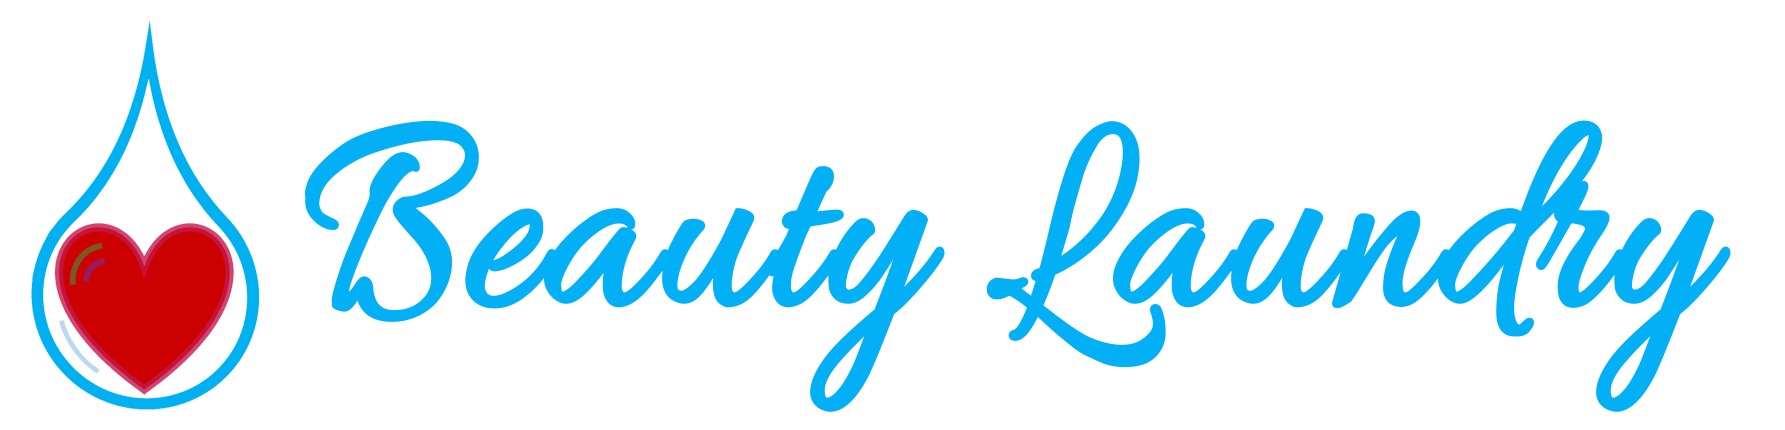 Beauty Laundry logo-final-min